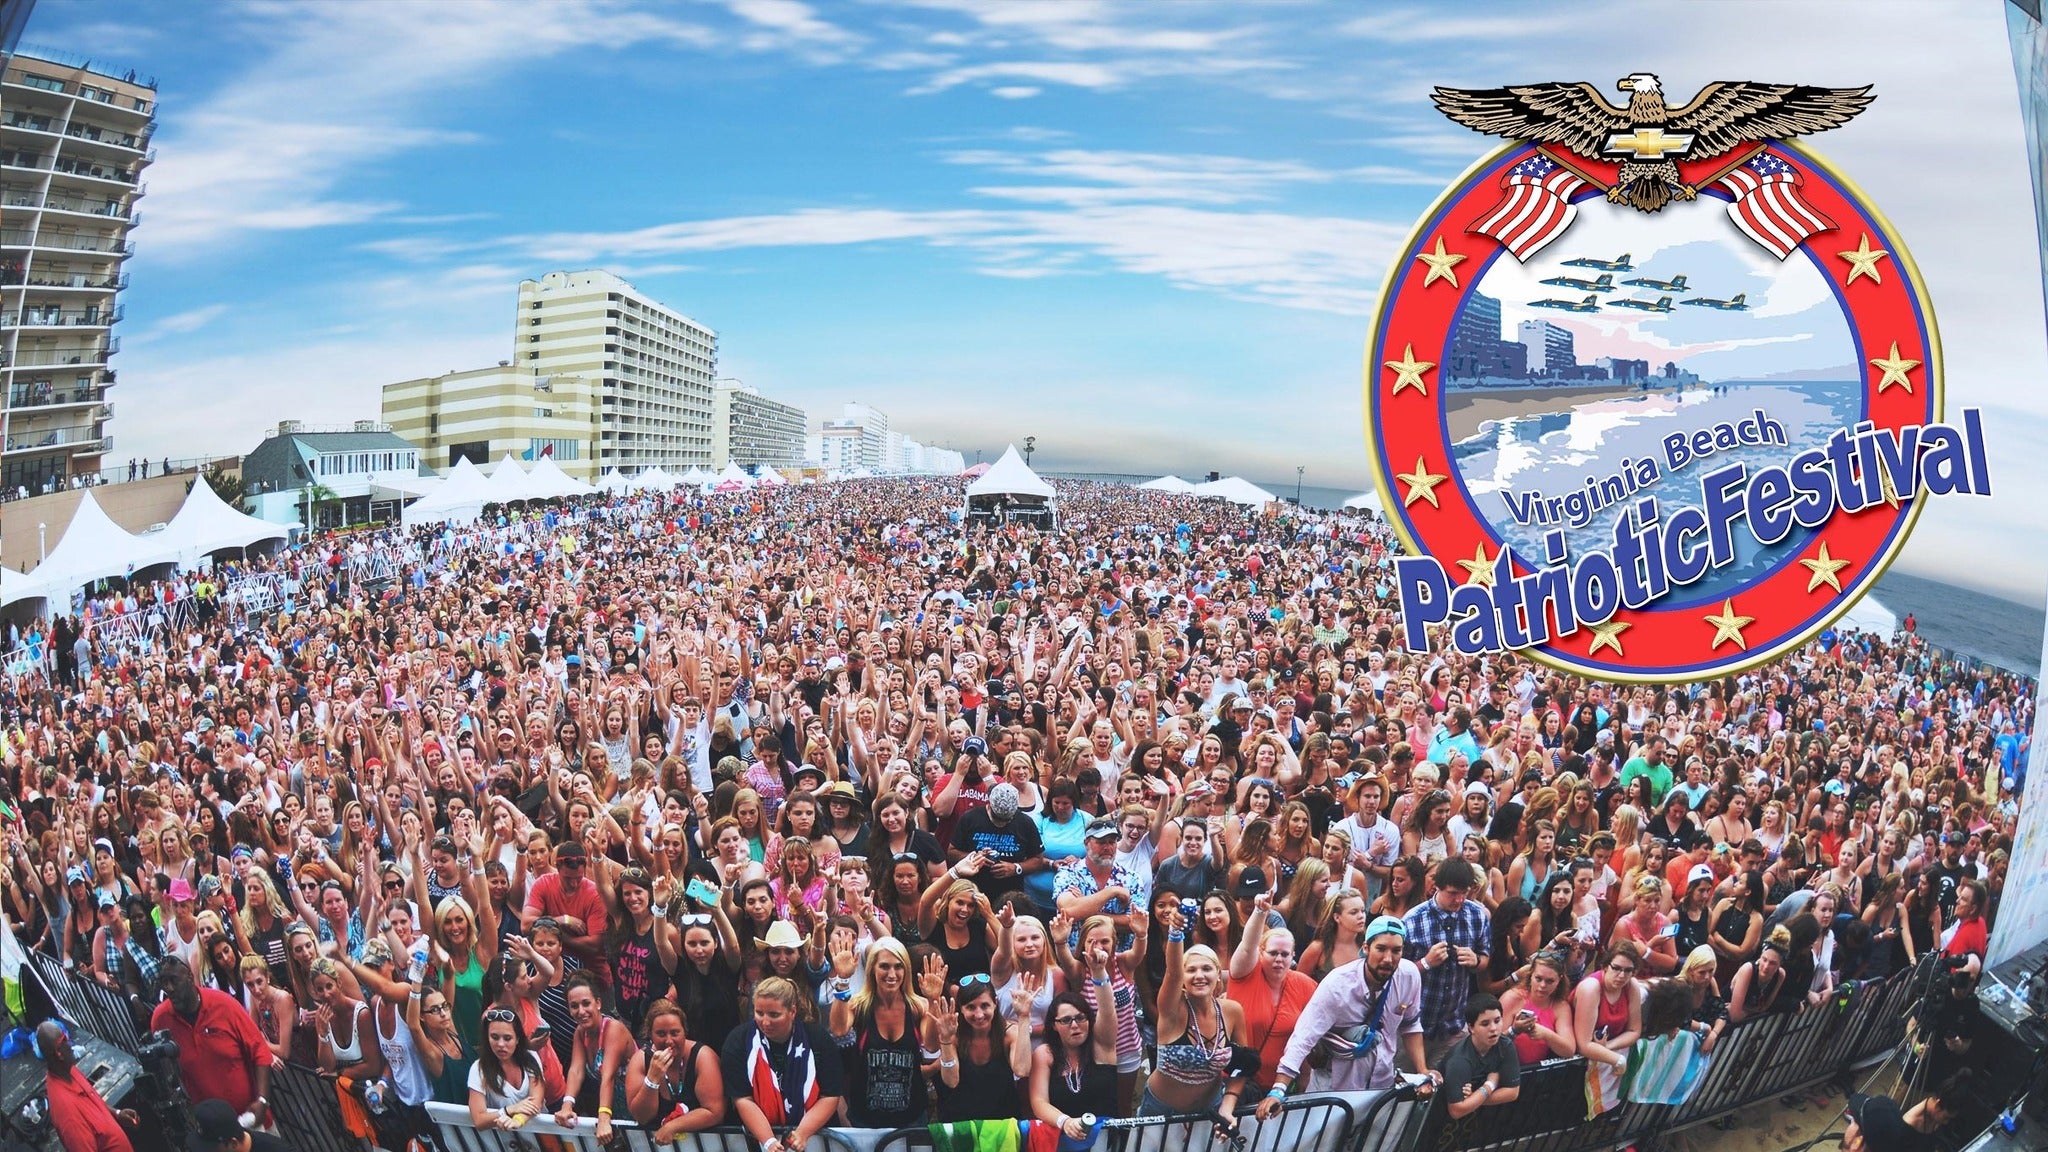 2020 Patriotic Festival: 3 Day in Virginia Beach promo photo for 10% Off presale offer code